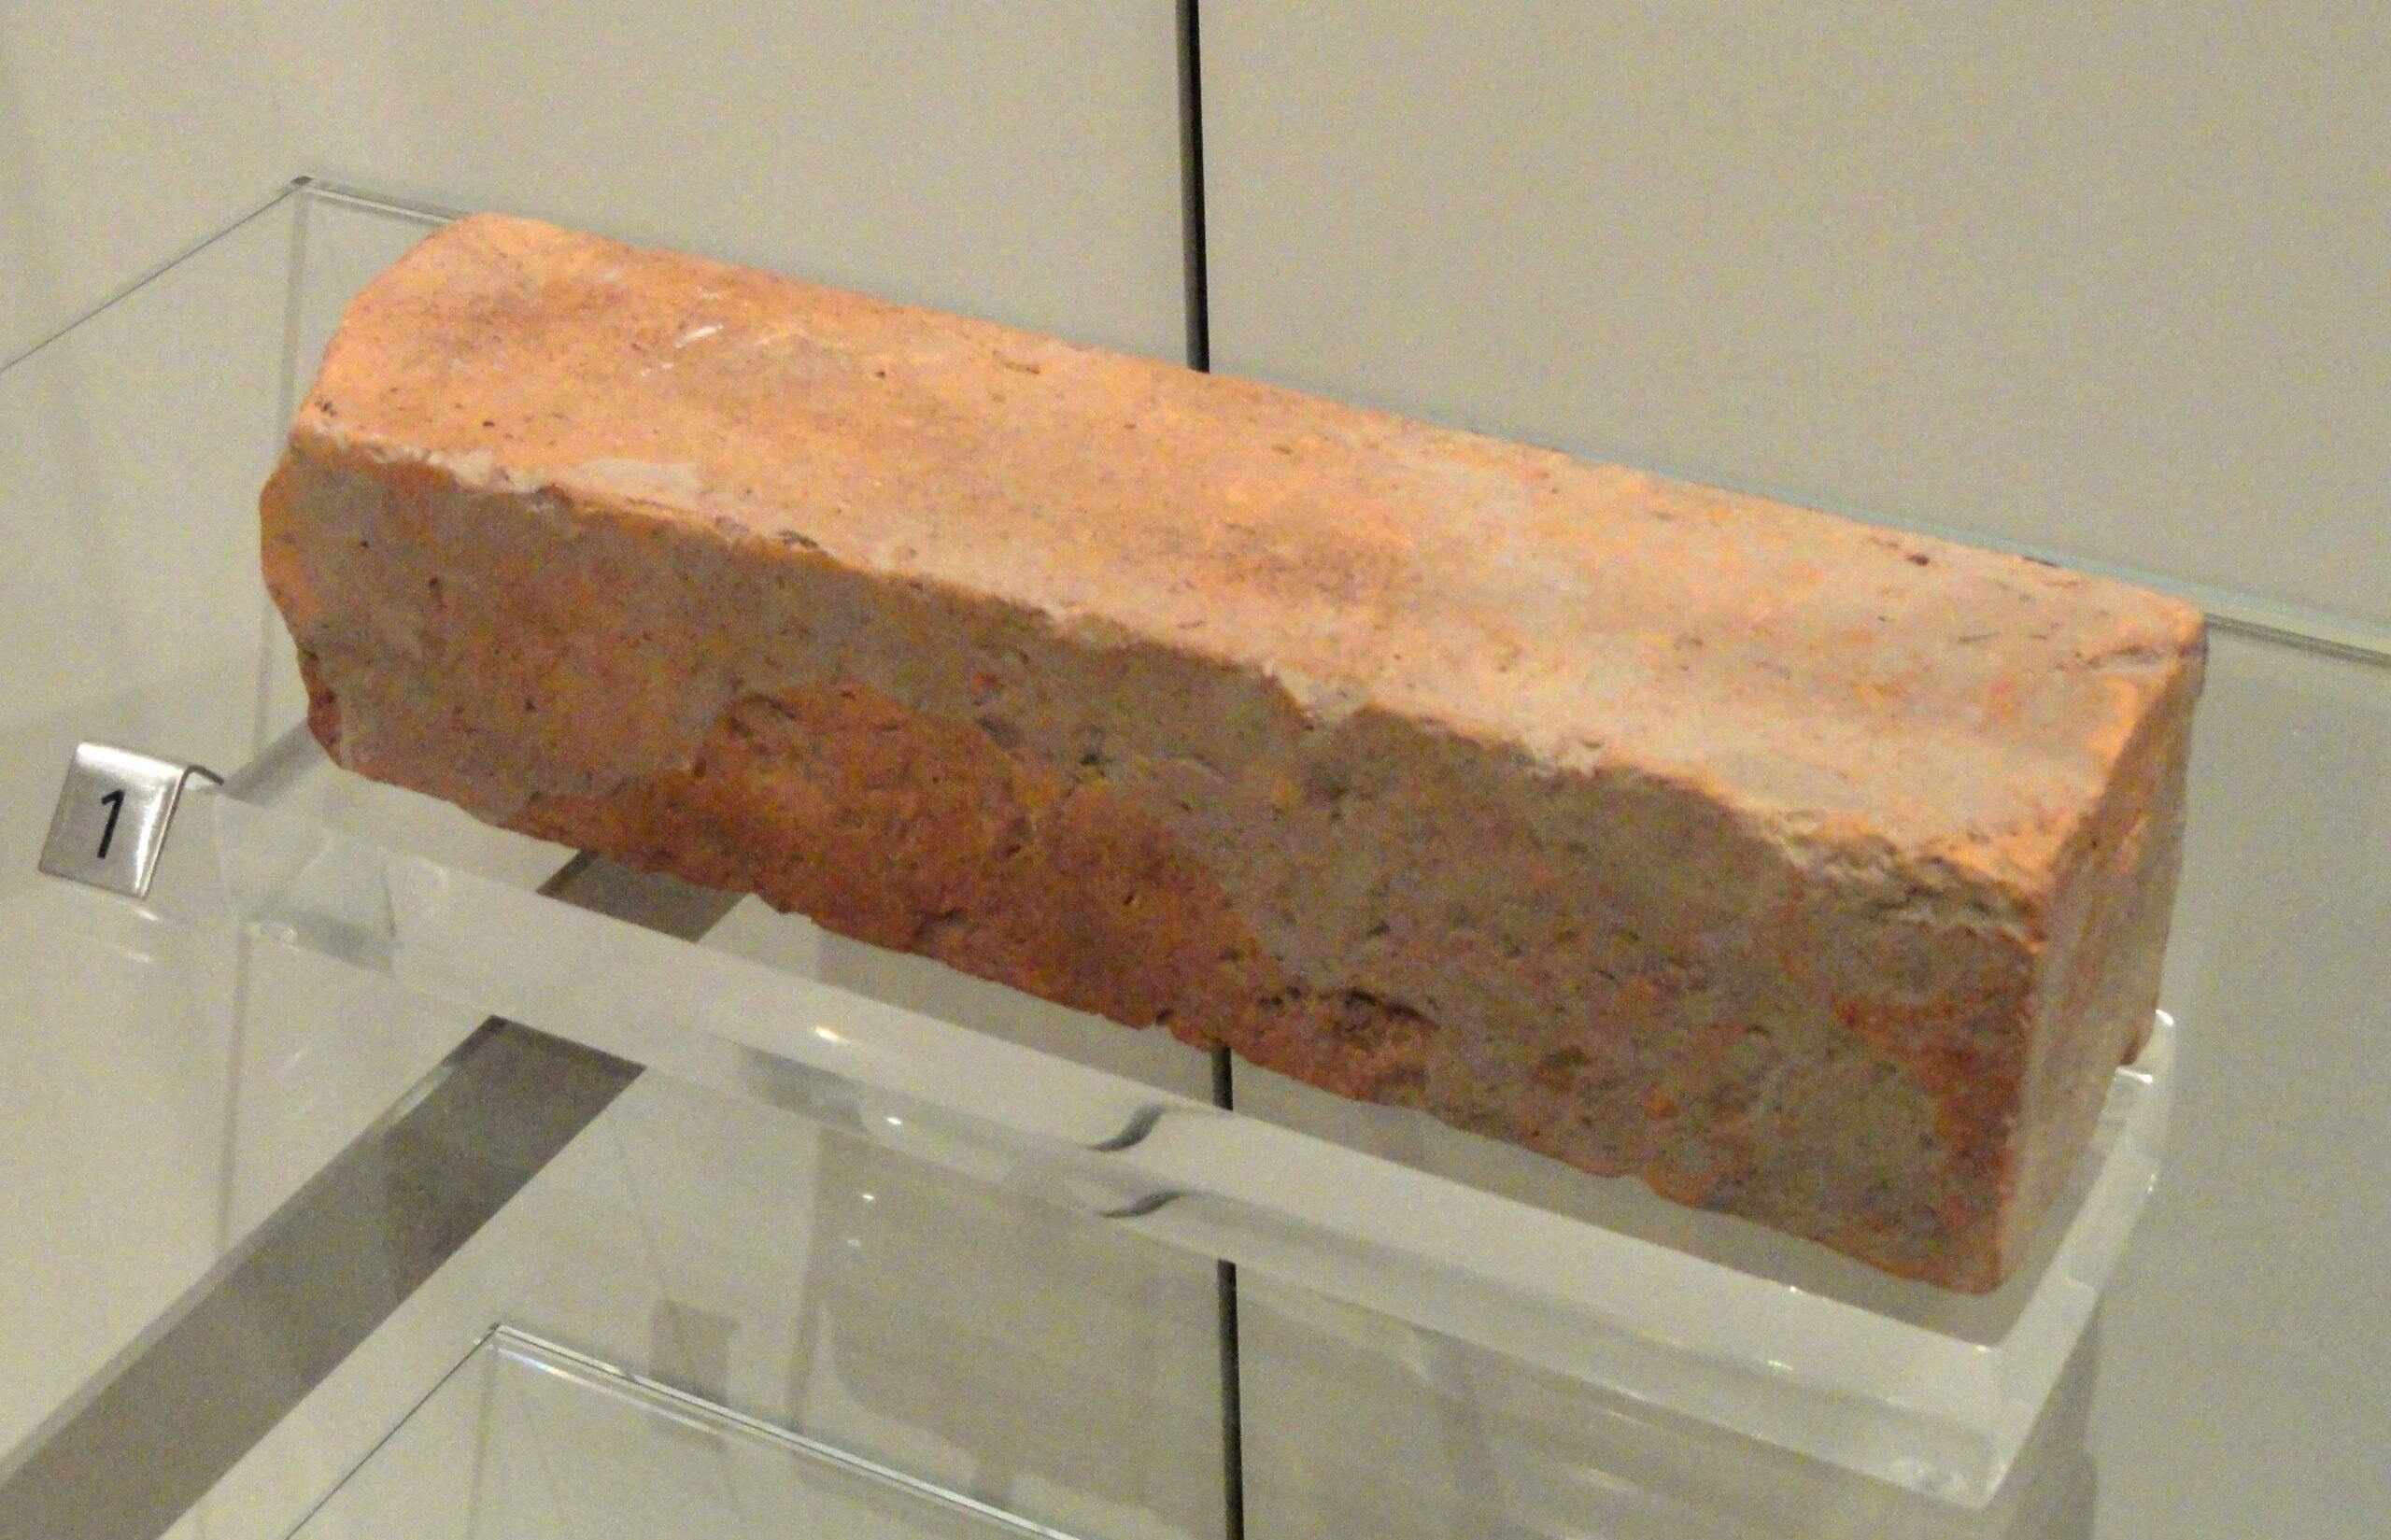 Harappan Phase Cut brick, c.2500-1900 BCE, Chanhudaro